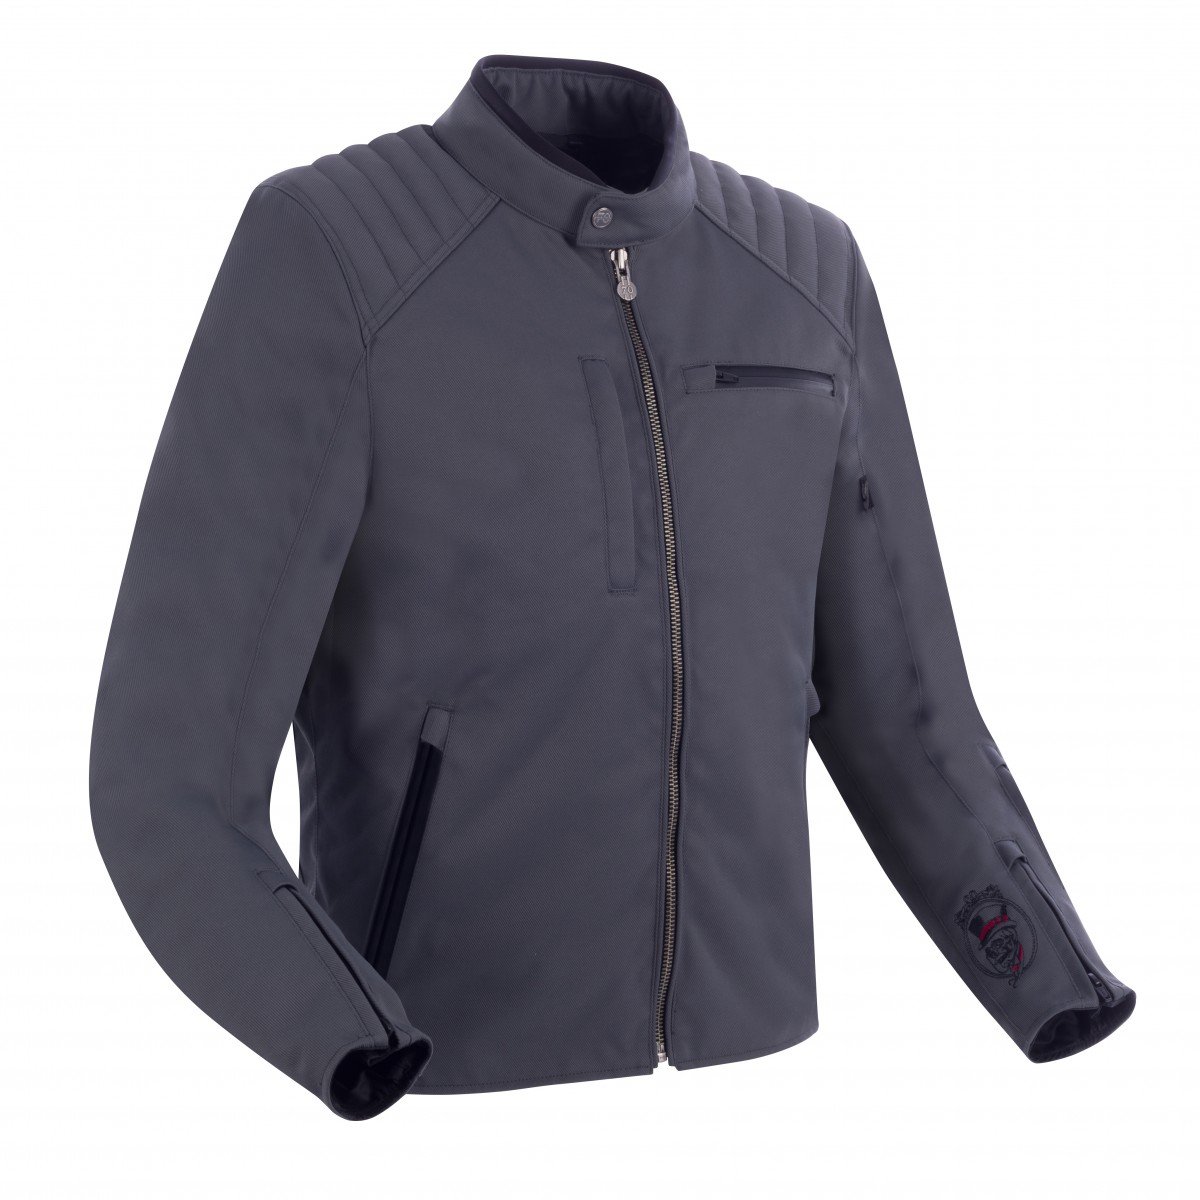 Image of Segura Eternal Jacket Gray Size S ID 3660815168646